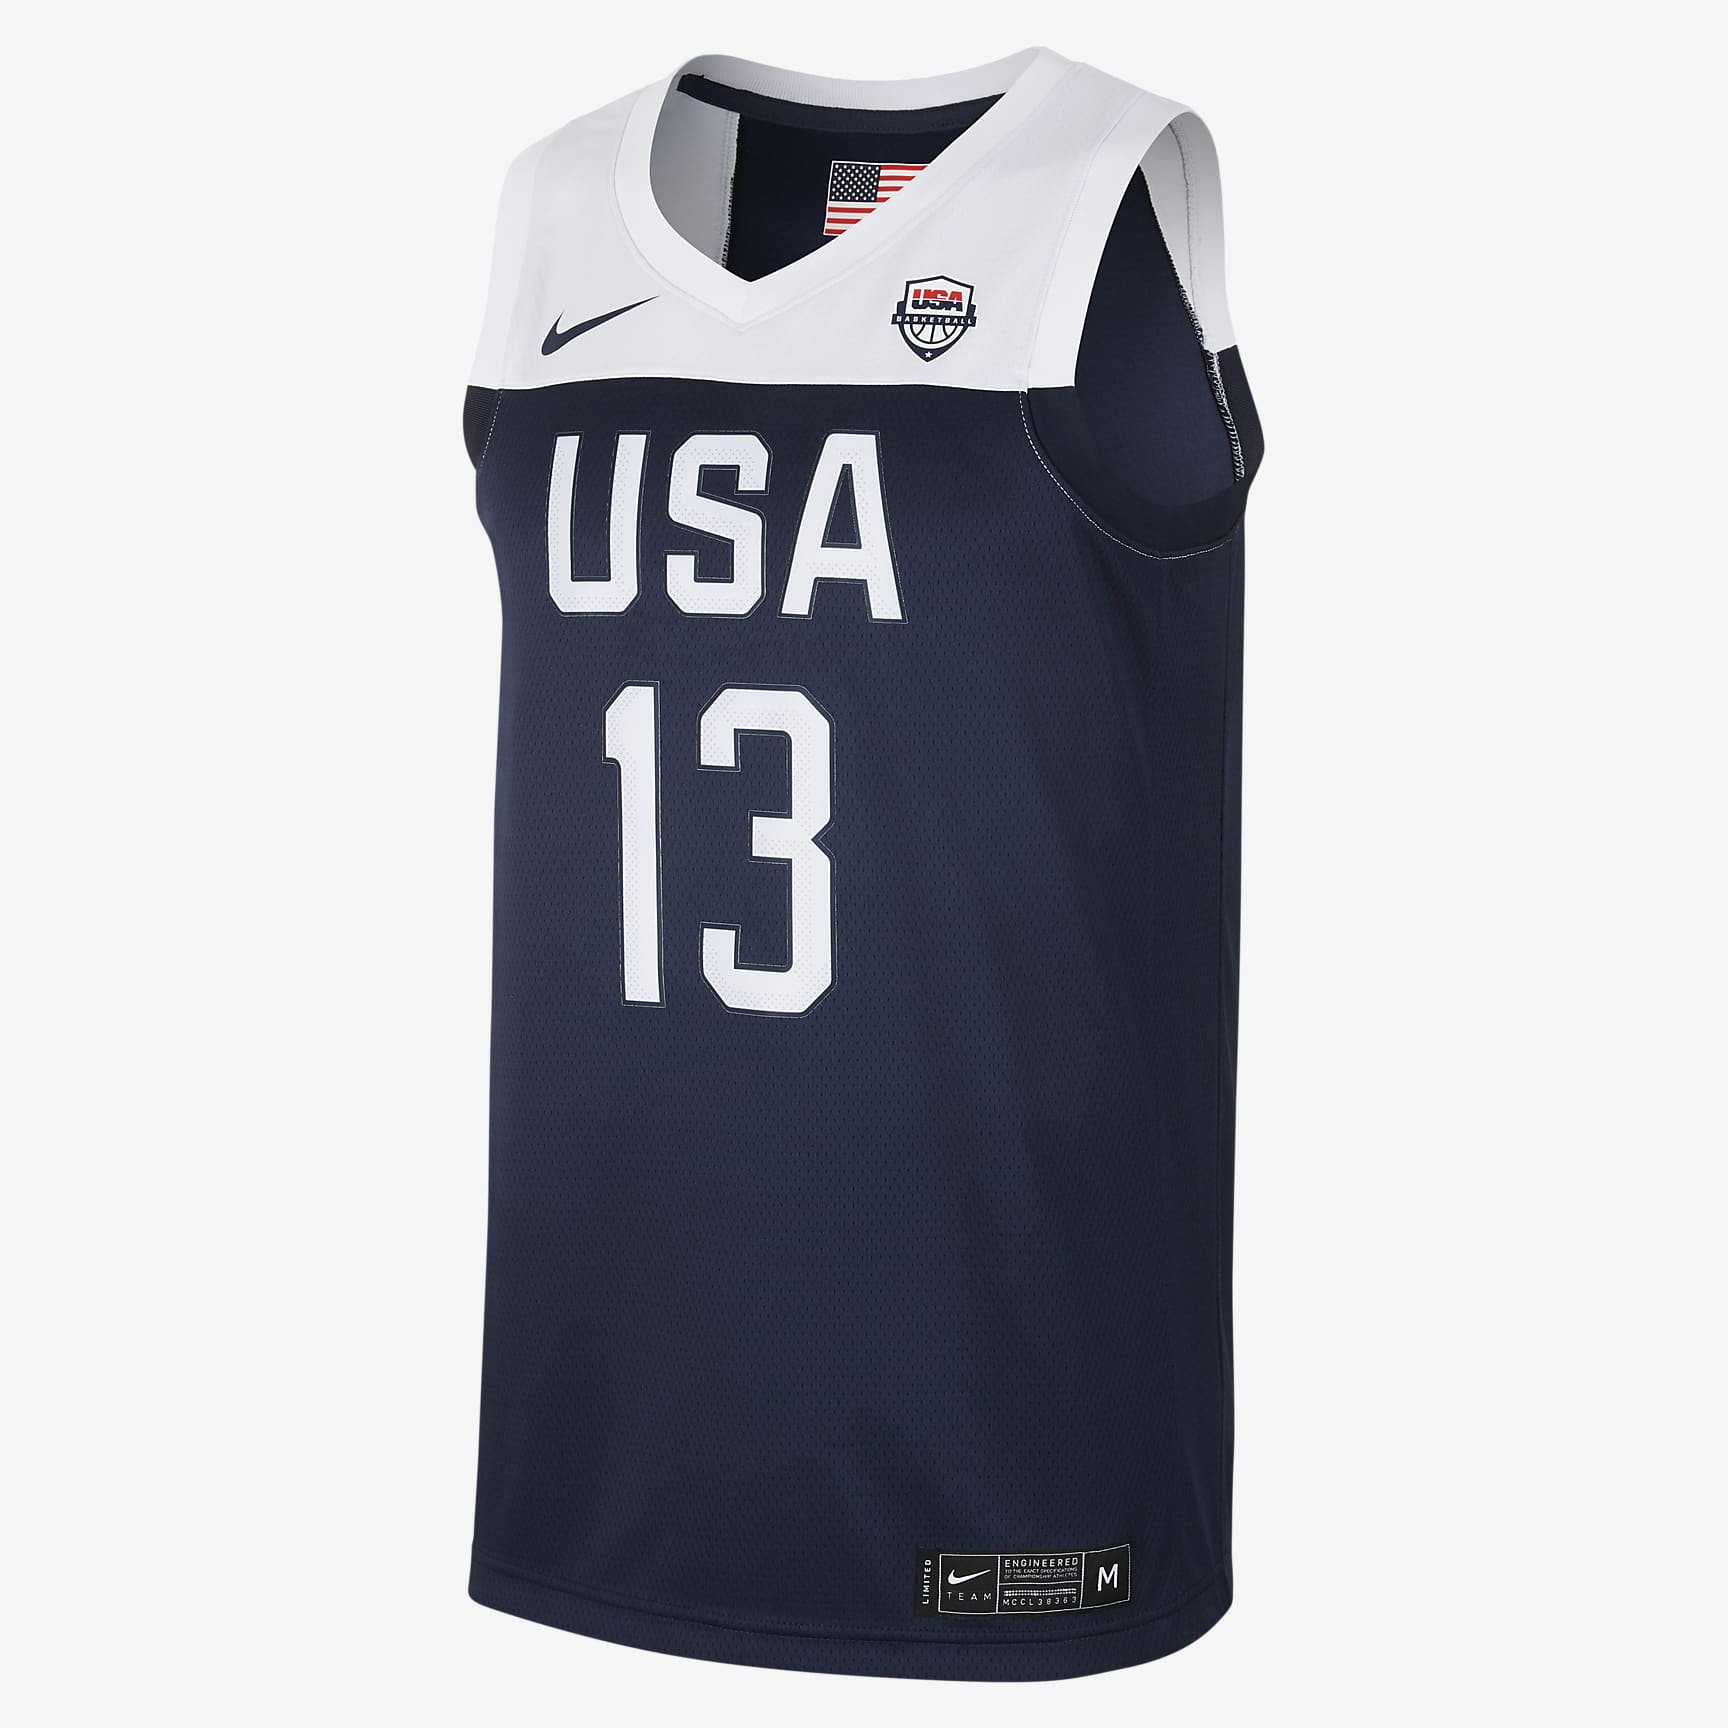 USA Nike (Road) Men's Basketball Jersey. Nike CA